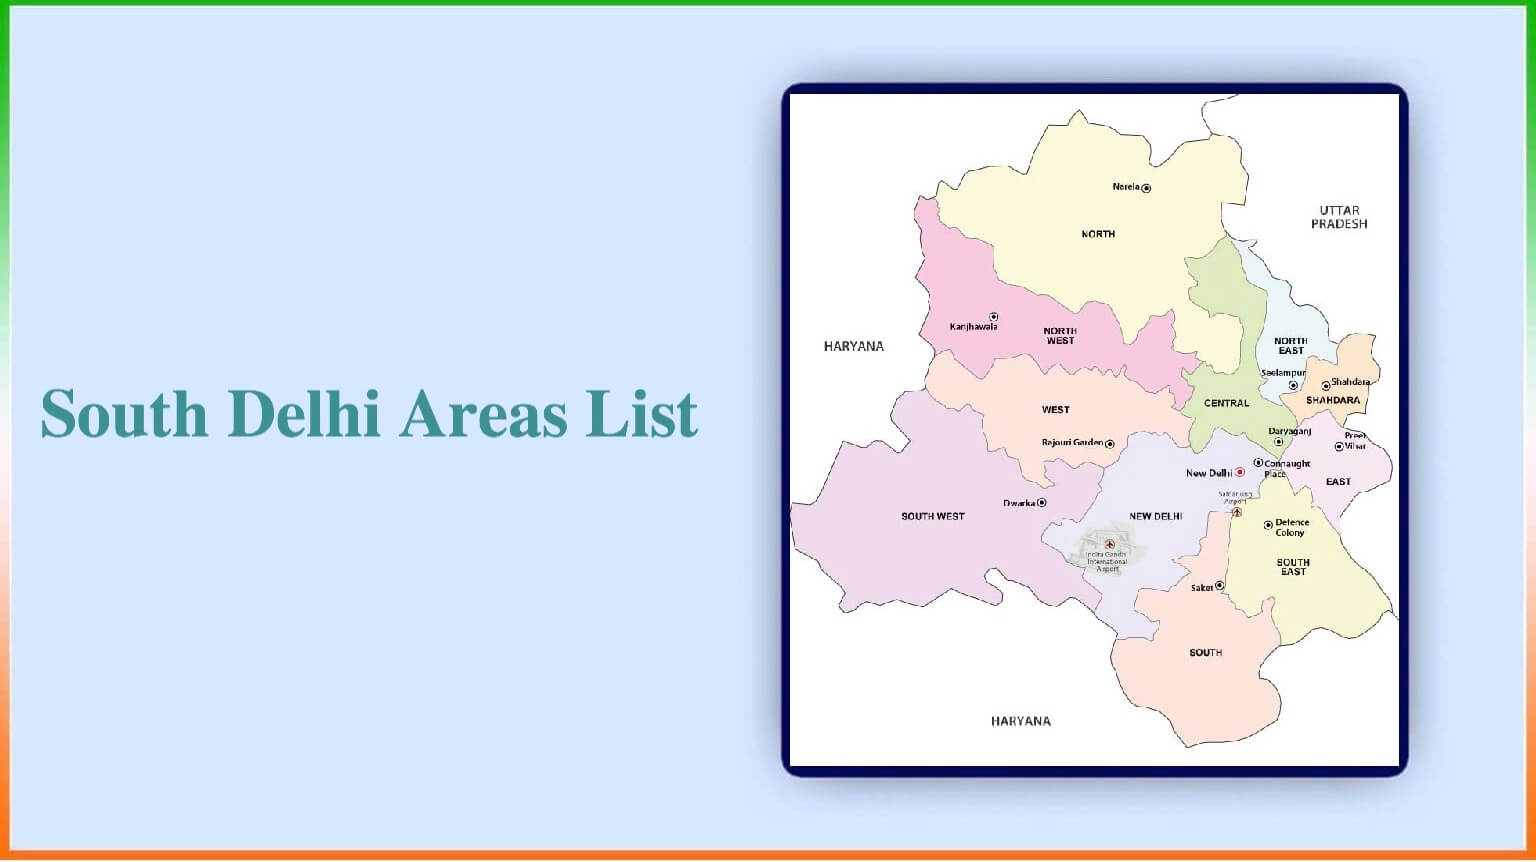 South Delhi Areas List